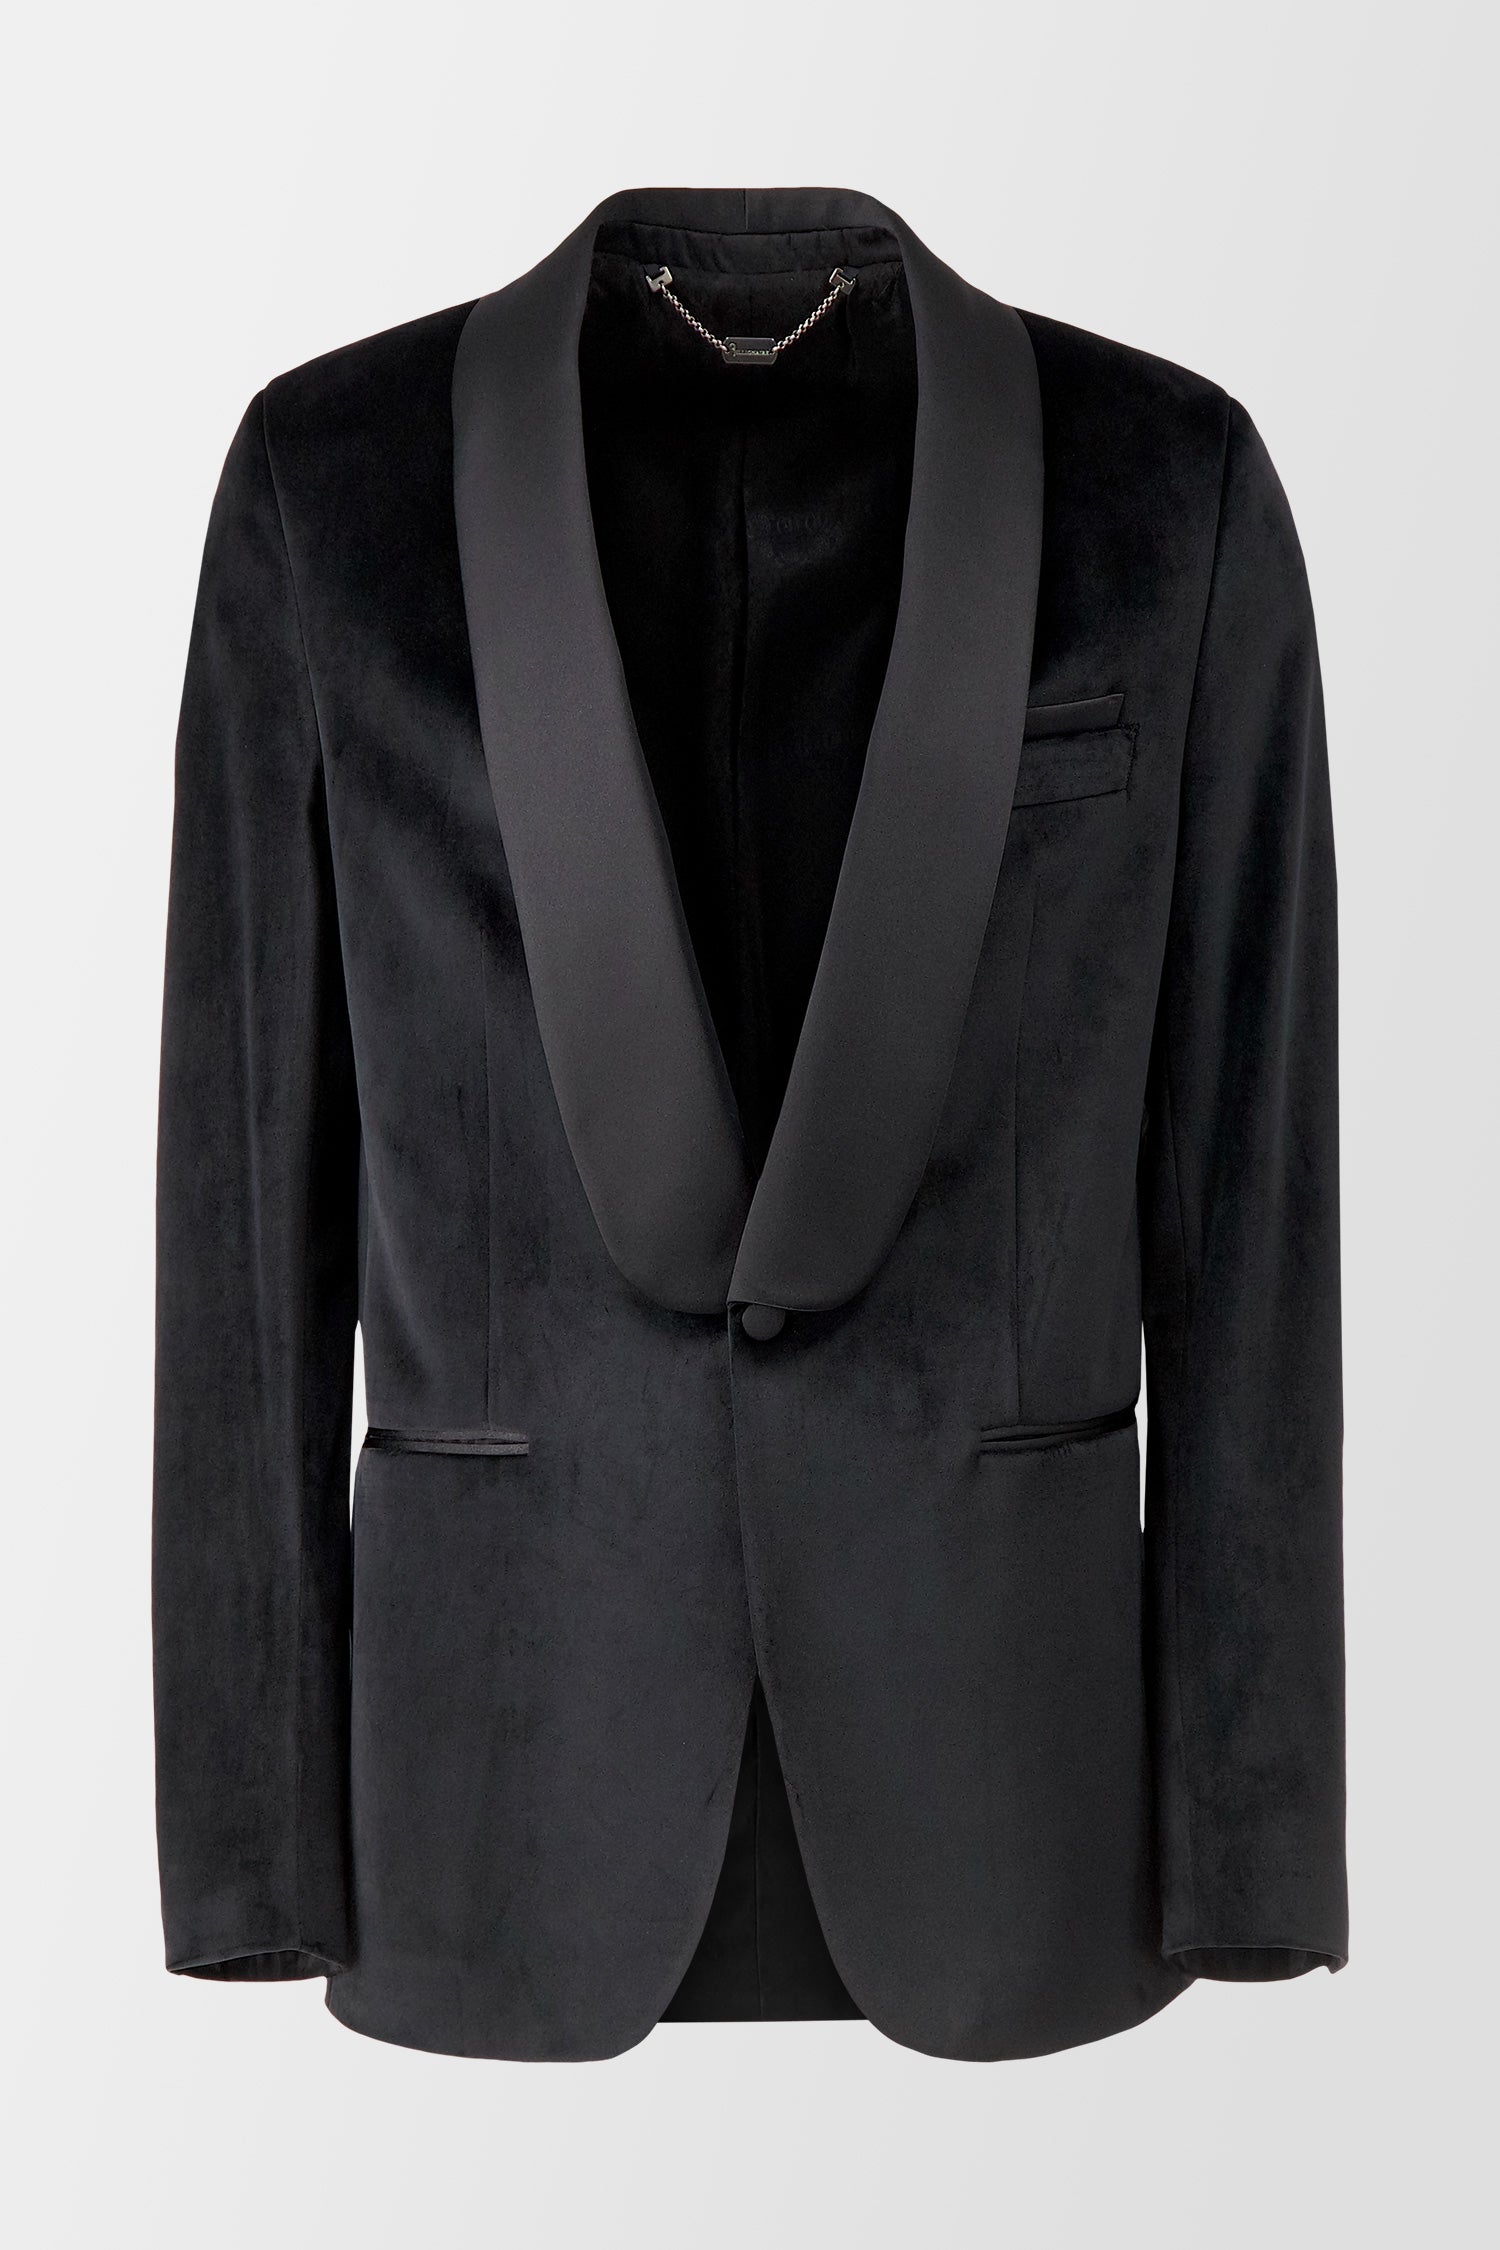 Billionaire Elegant Black Tailored Fit Blazer